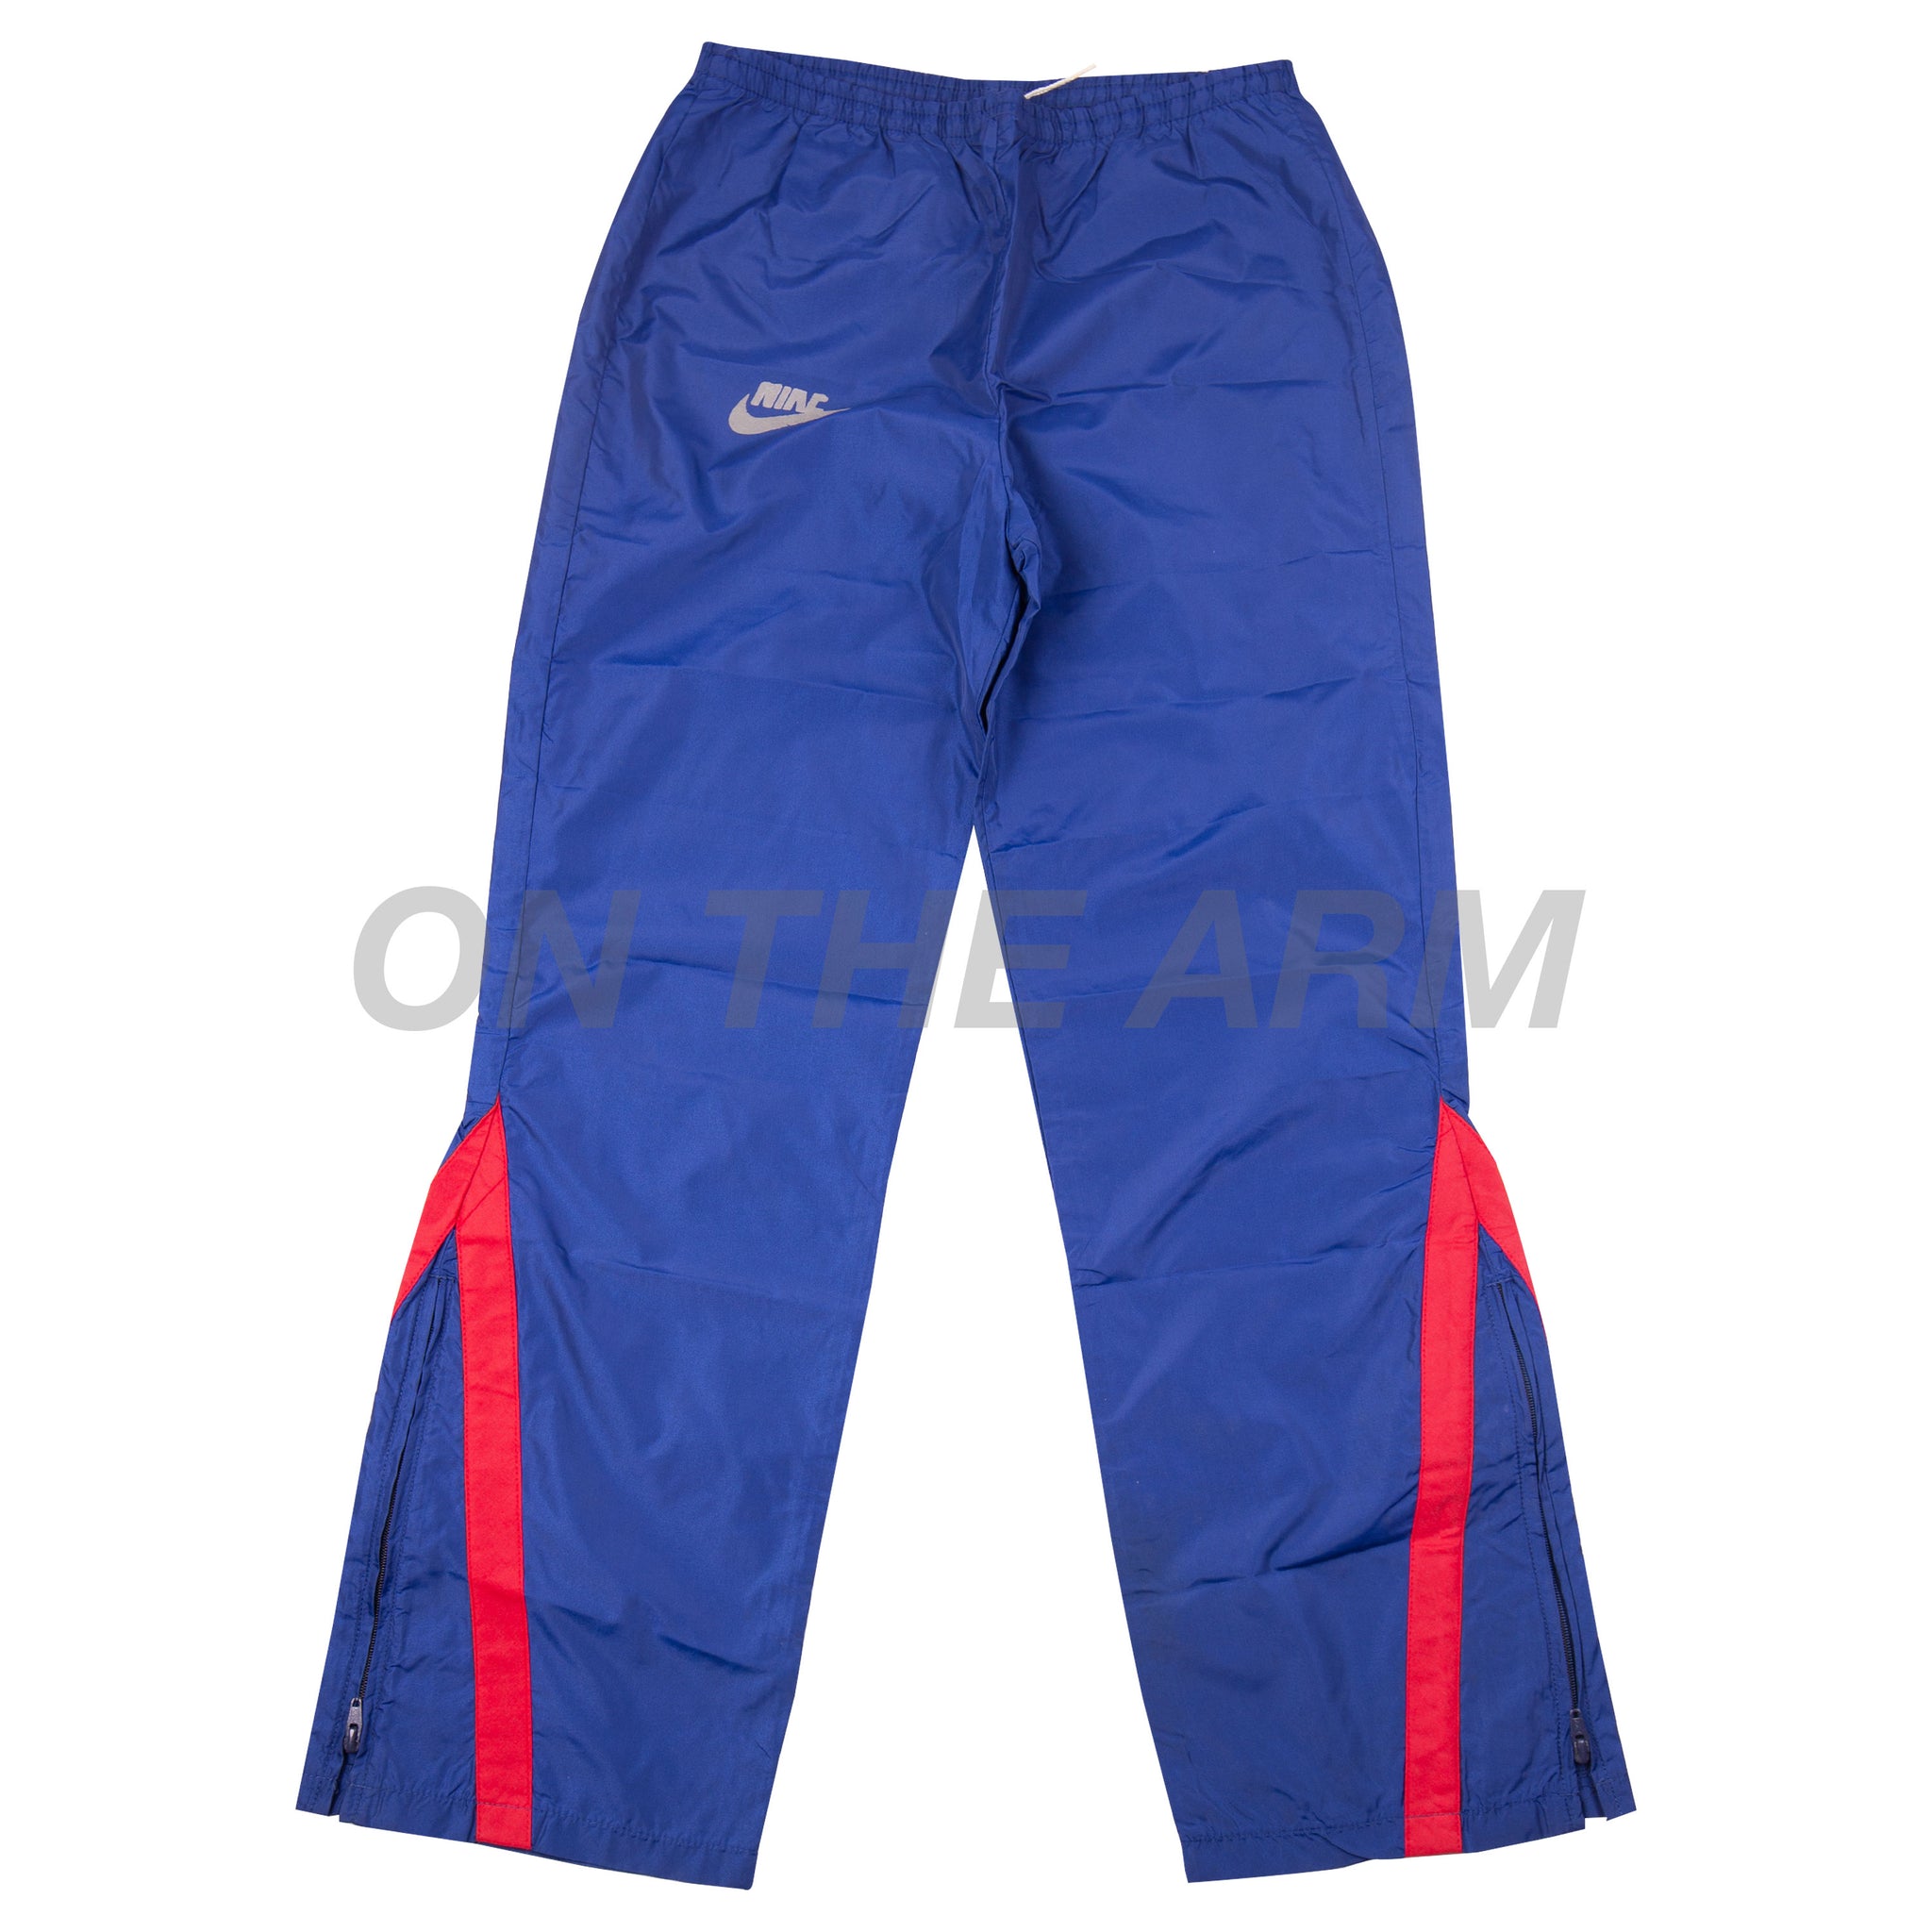 Vintage Blue/Red Nike Nylon Pants